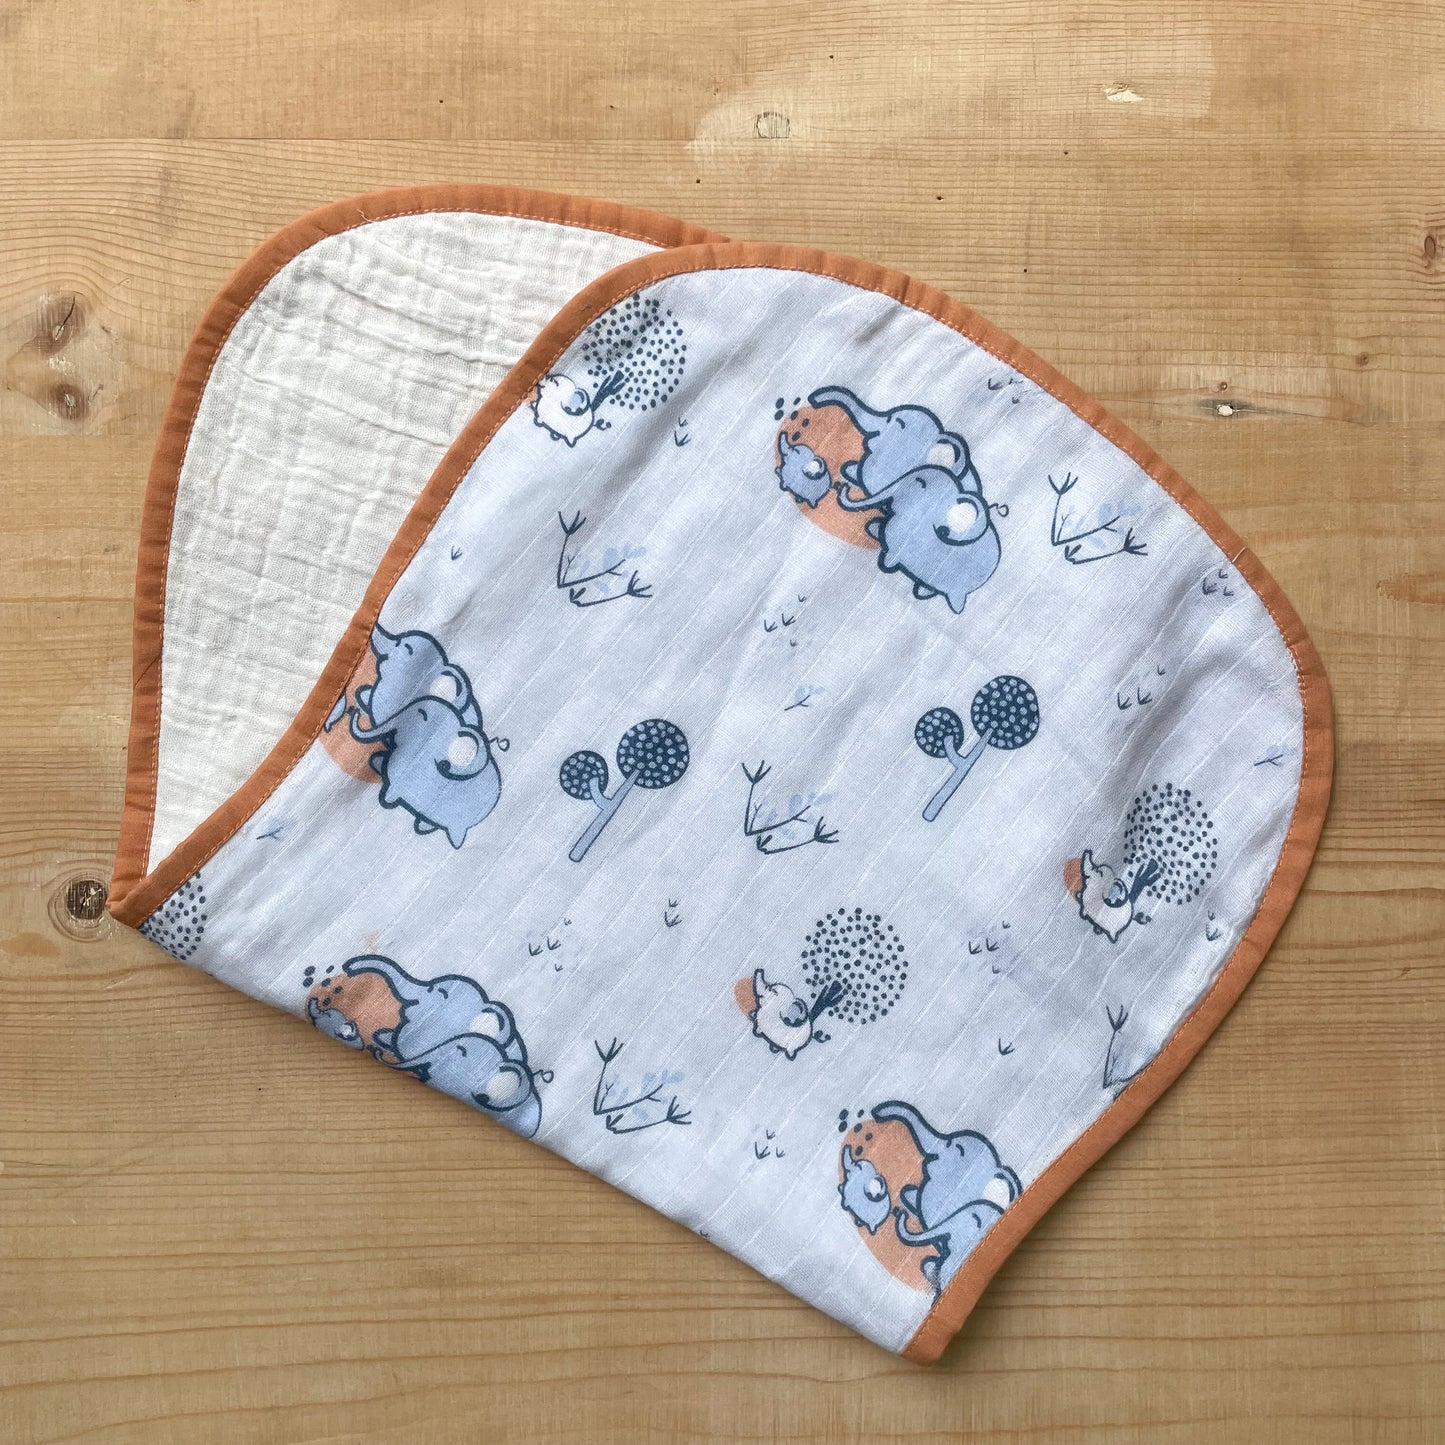 Newborn Bib and Burp Cloth Set (Elephant Print)